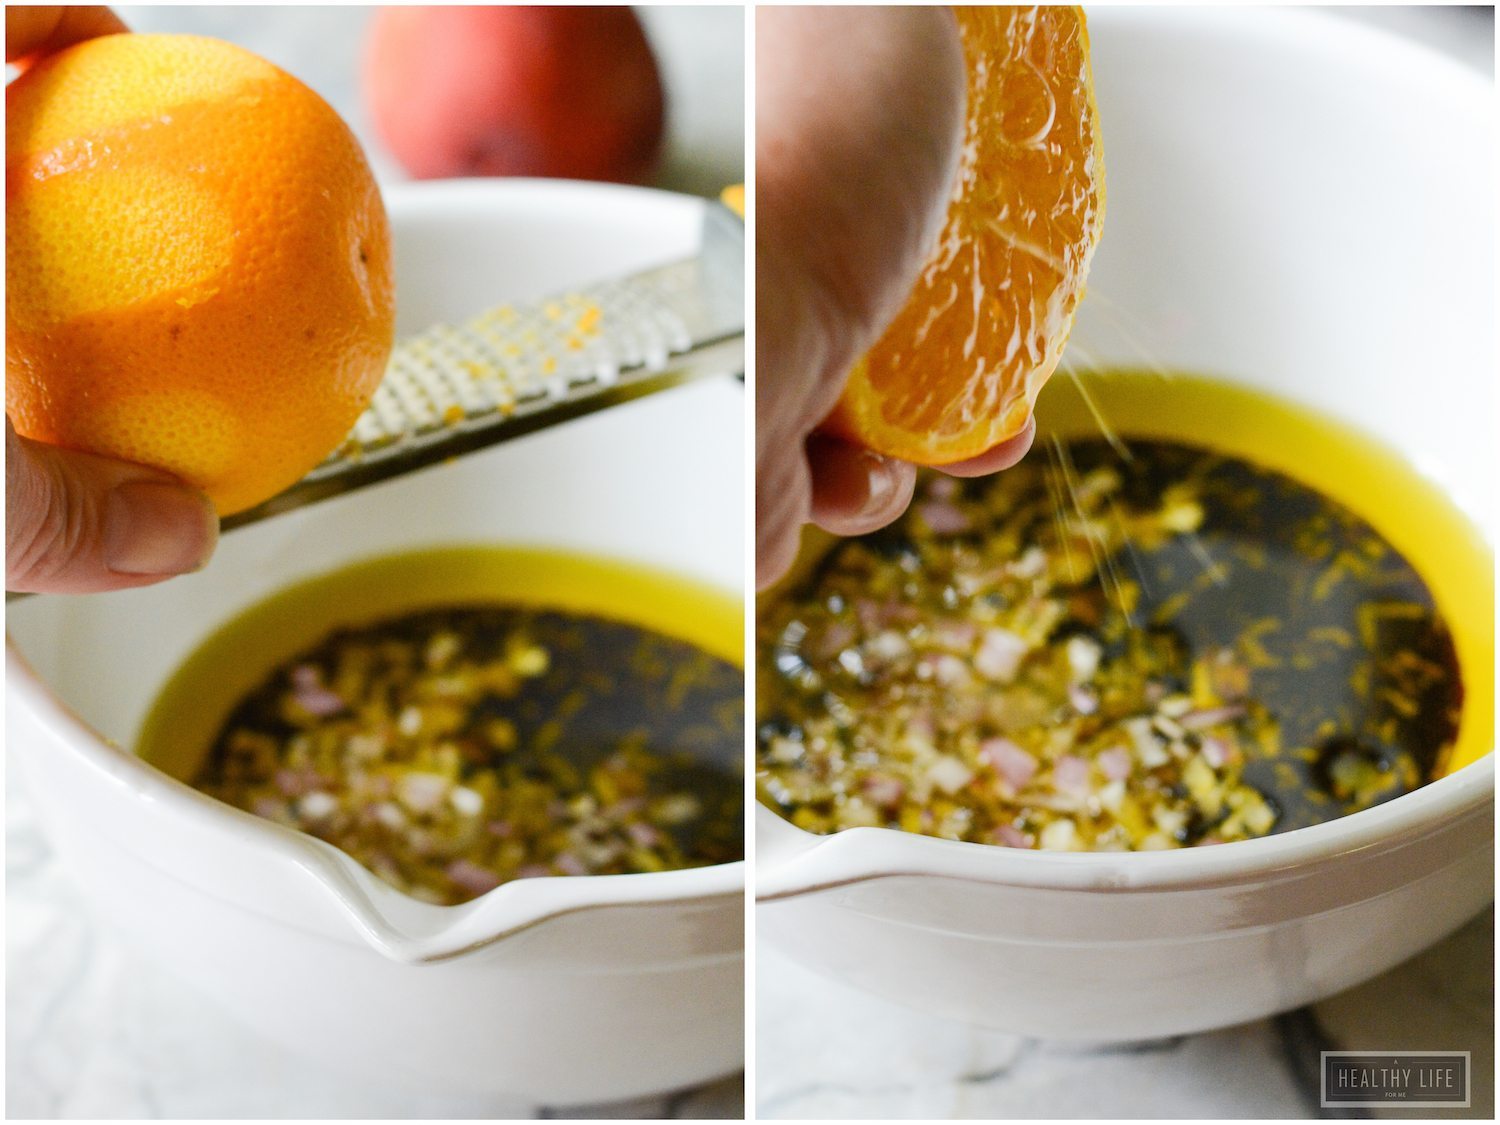 Grating orange into vinaigrette